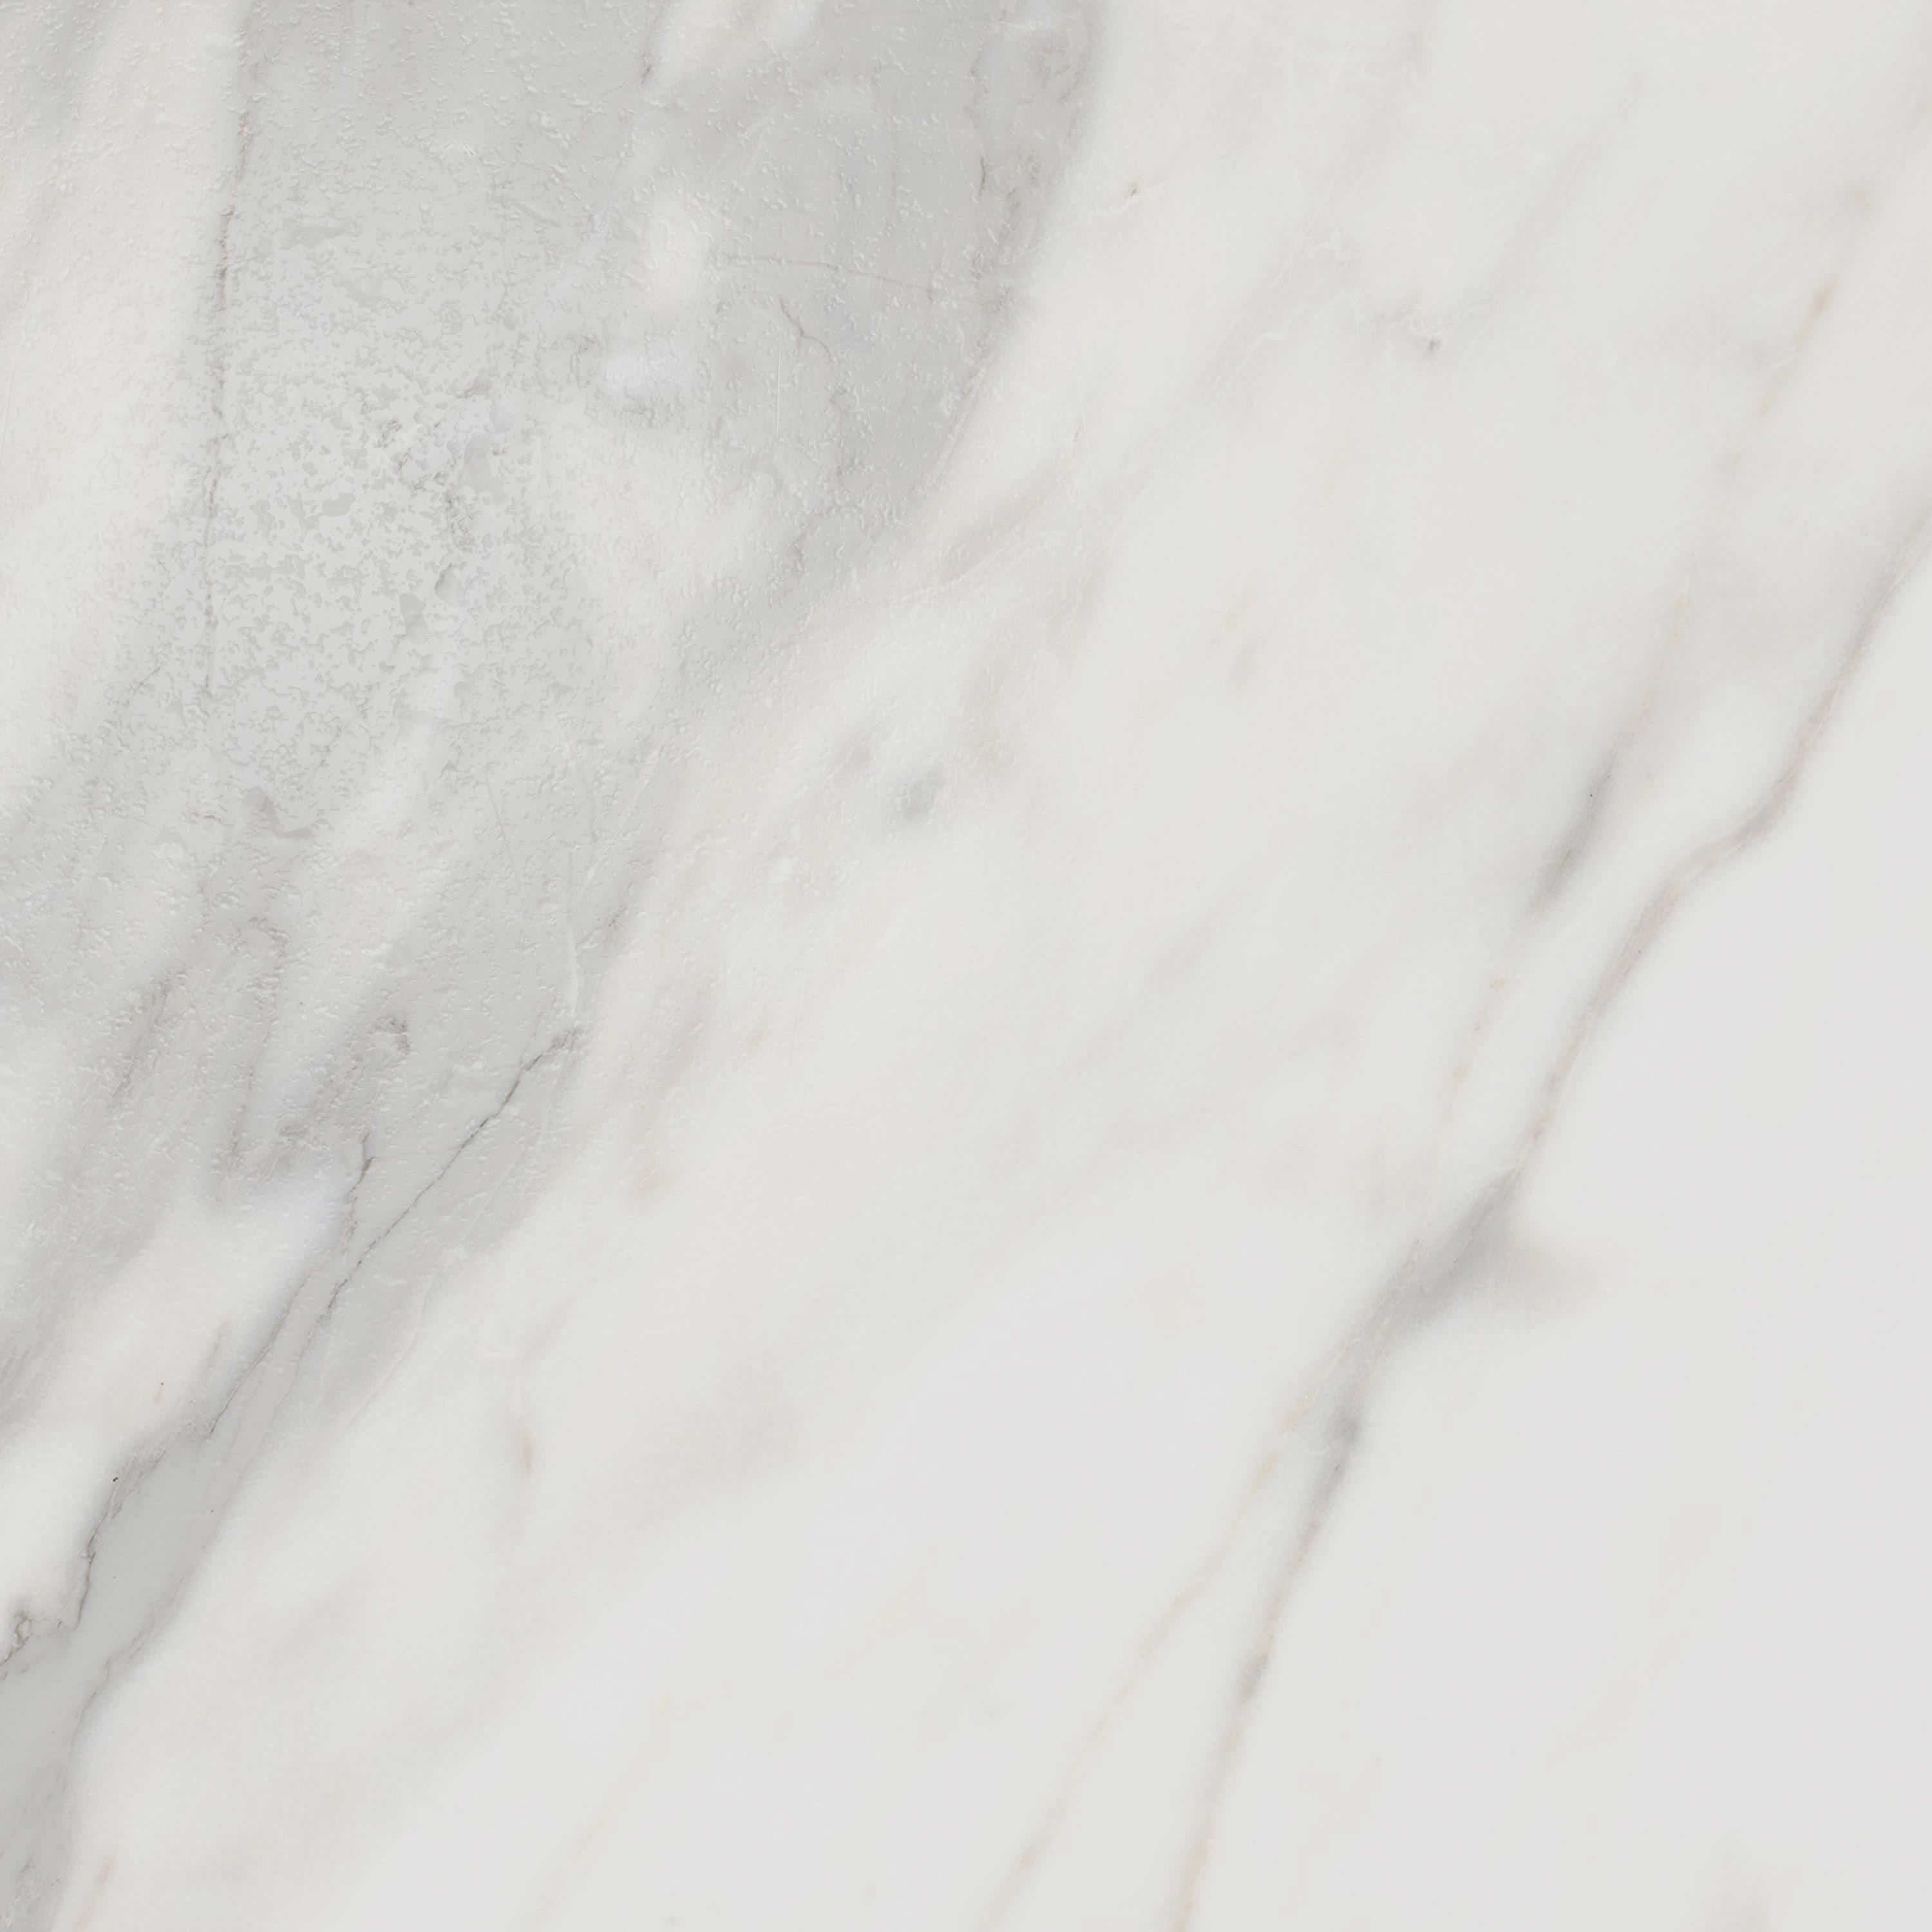 Fundo Top revêtement prêt-à-poser pour receveur Riolito Neo, aspect marbre blanc